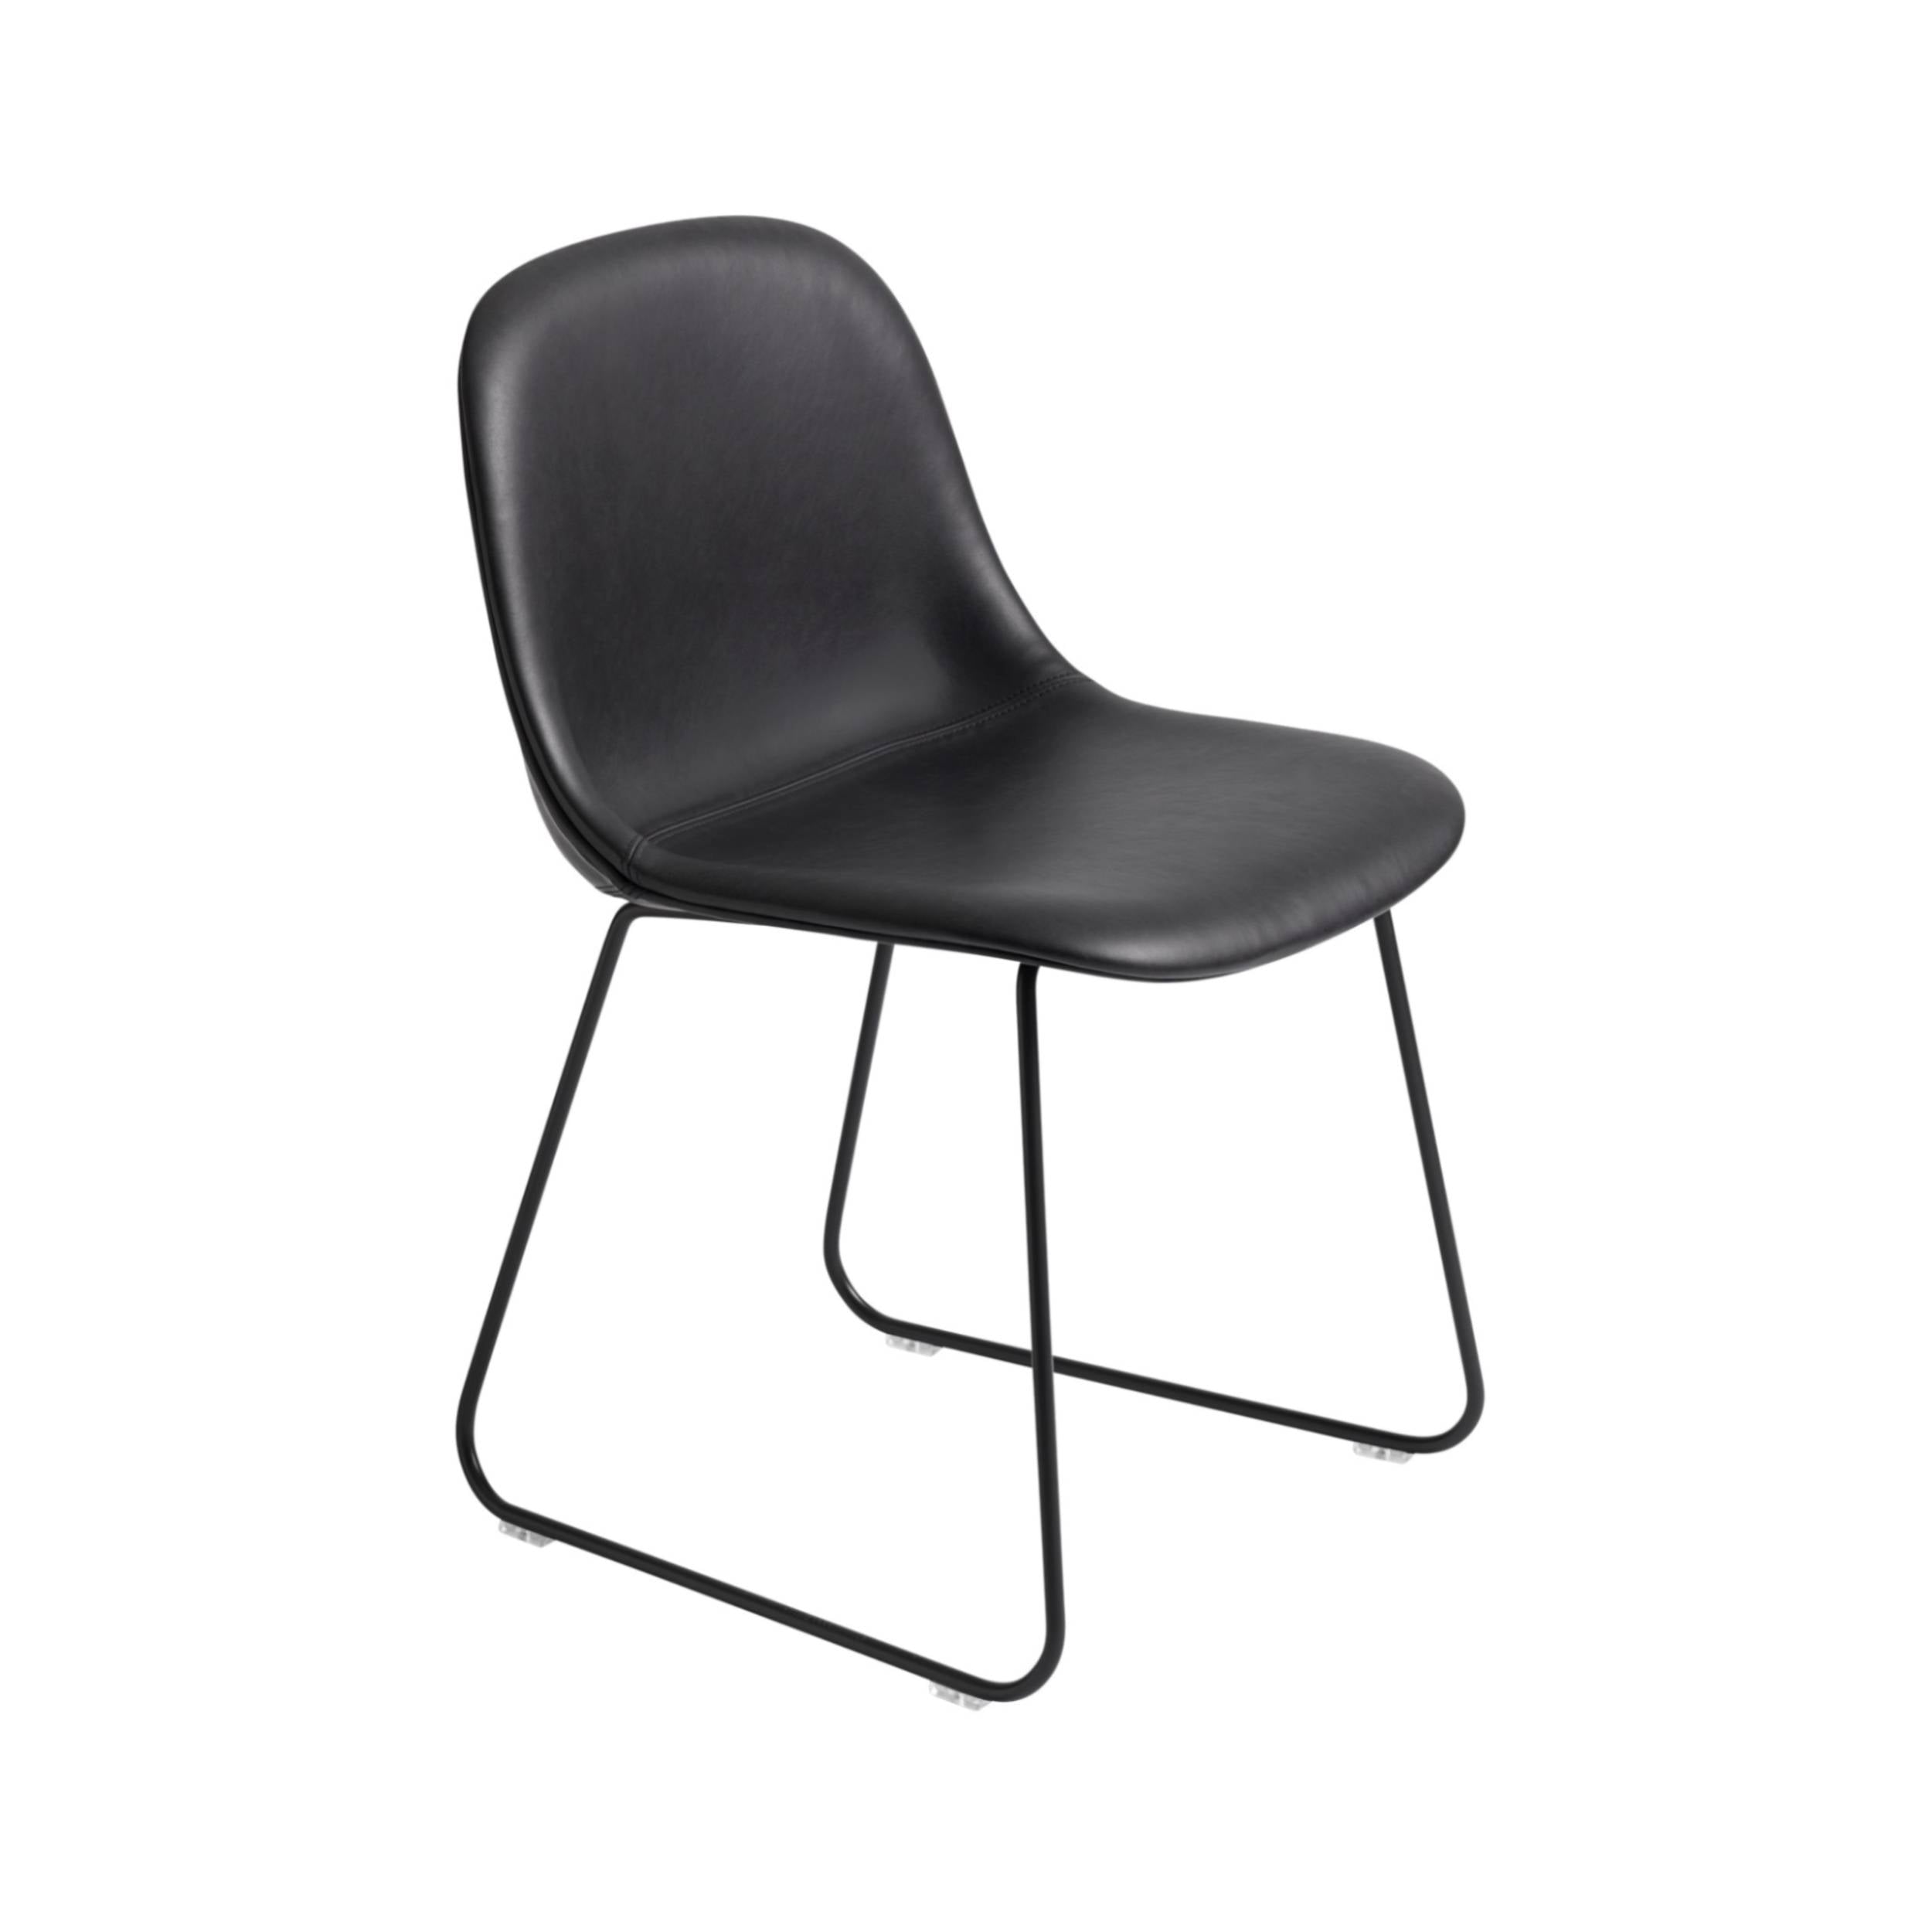 Fiber Side Chair: Sled Base + Recycled Shell + Upholstered + Anthracite Black